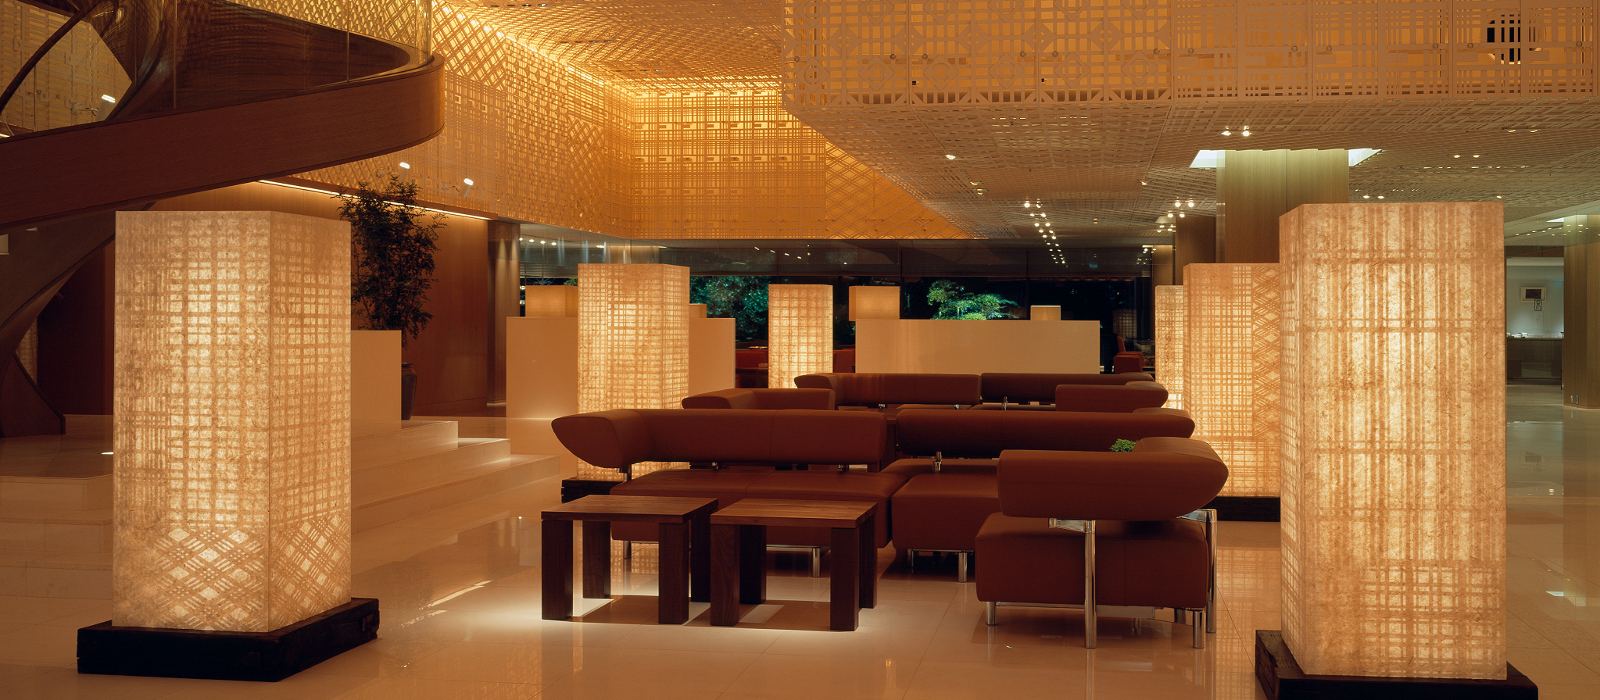 Hyatt regency kyoto hotel in japan enchanting travels for Design hotel kyoto